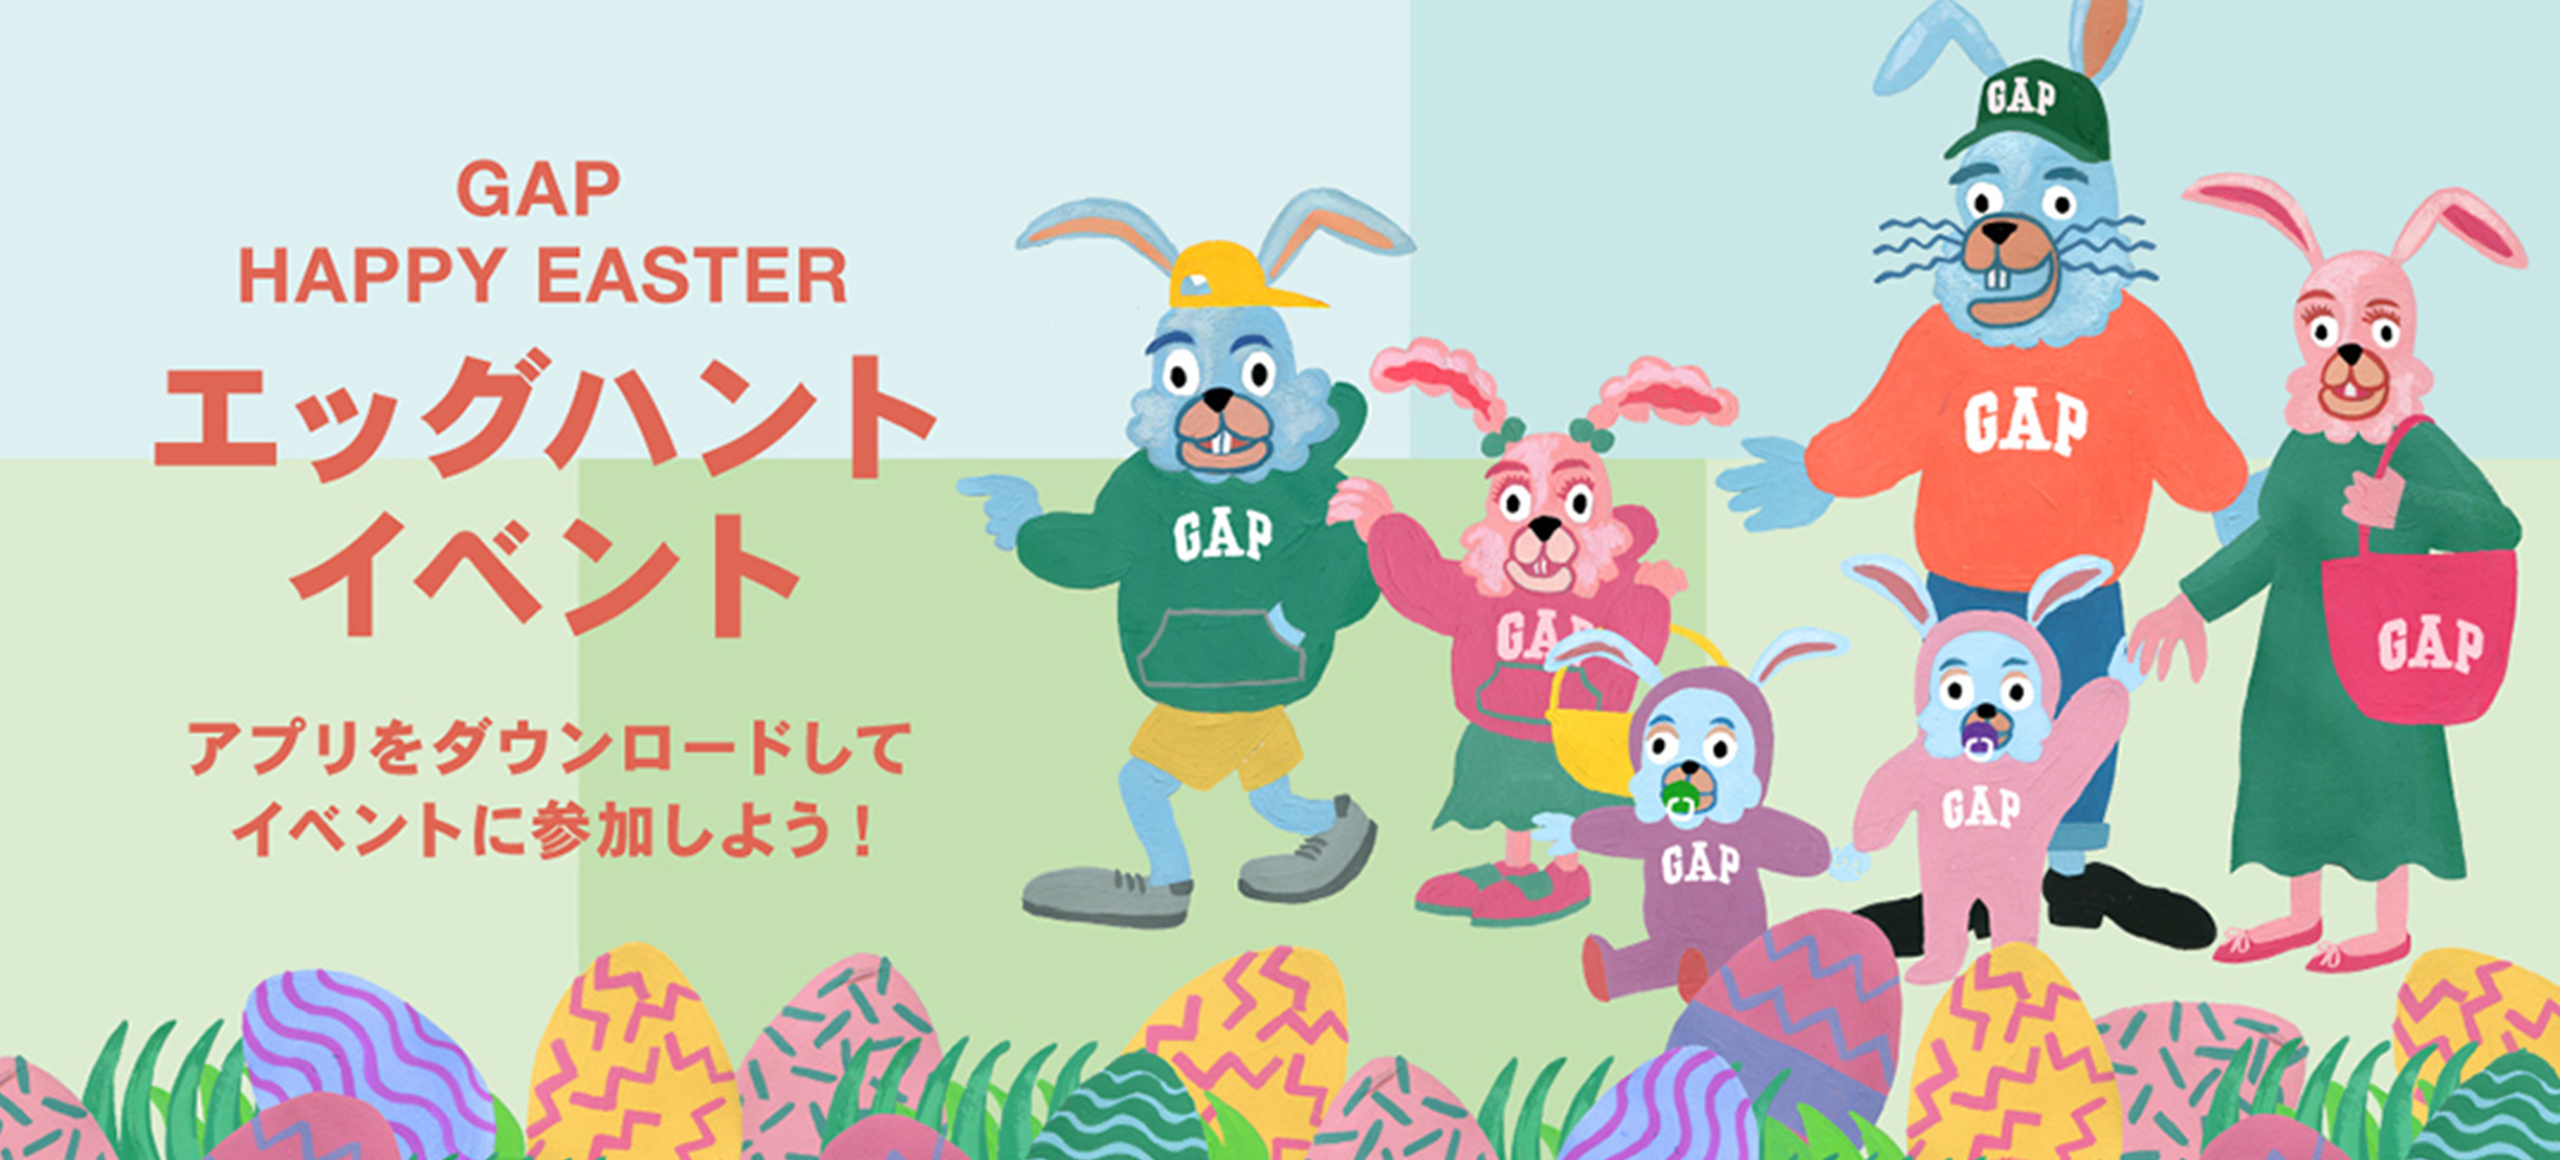 GAP HAPPY EASTER 店頭キャンペーン